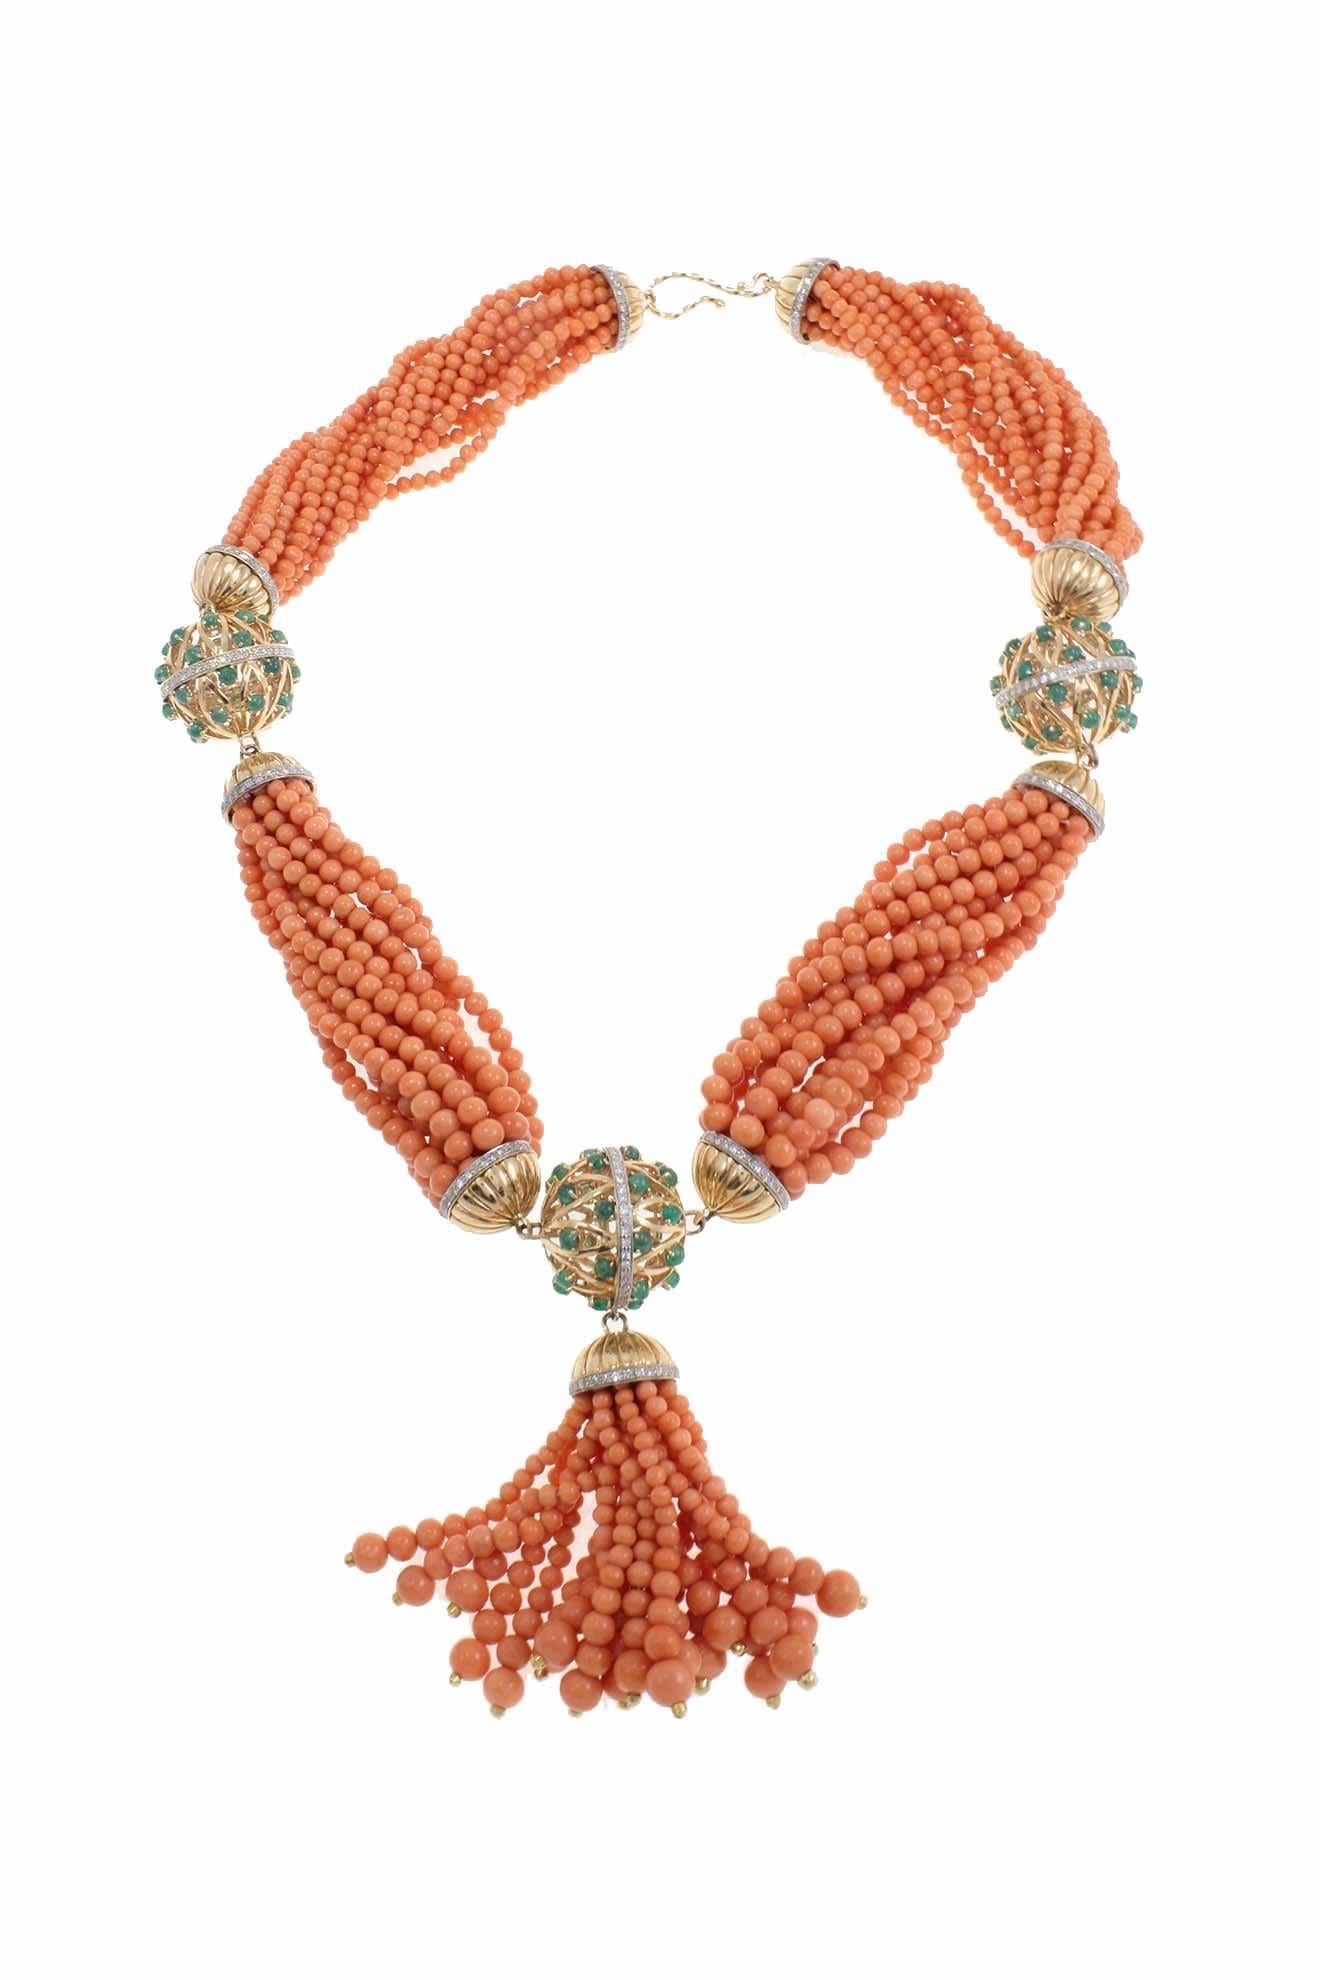 Retro Diamonds, Emeralds, Orange Beaded Rows Coral, Gold Multi-Strand/Beaded Necklace